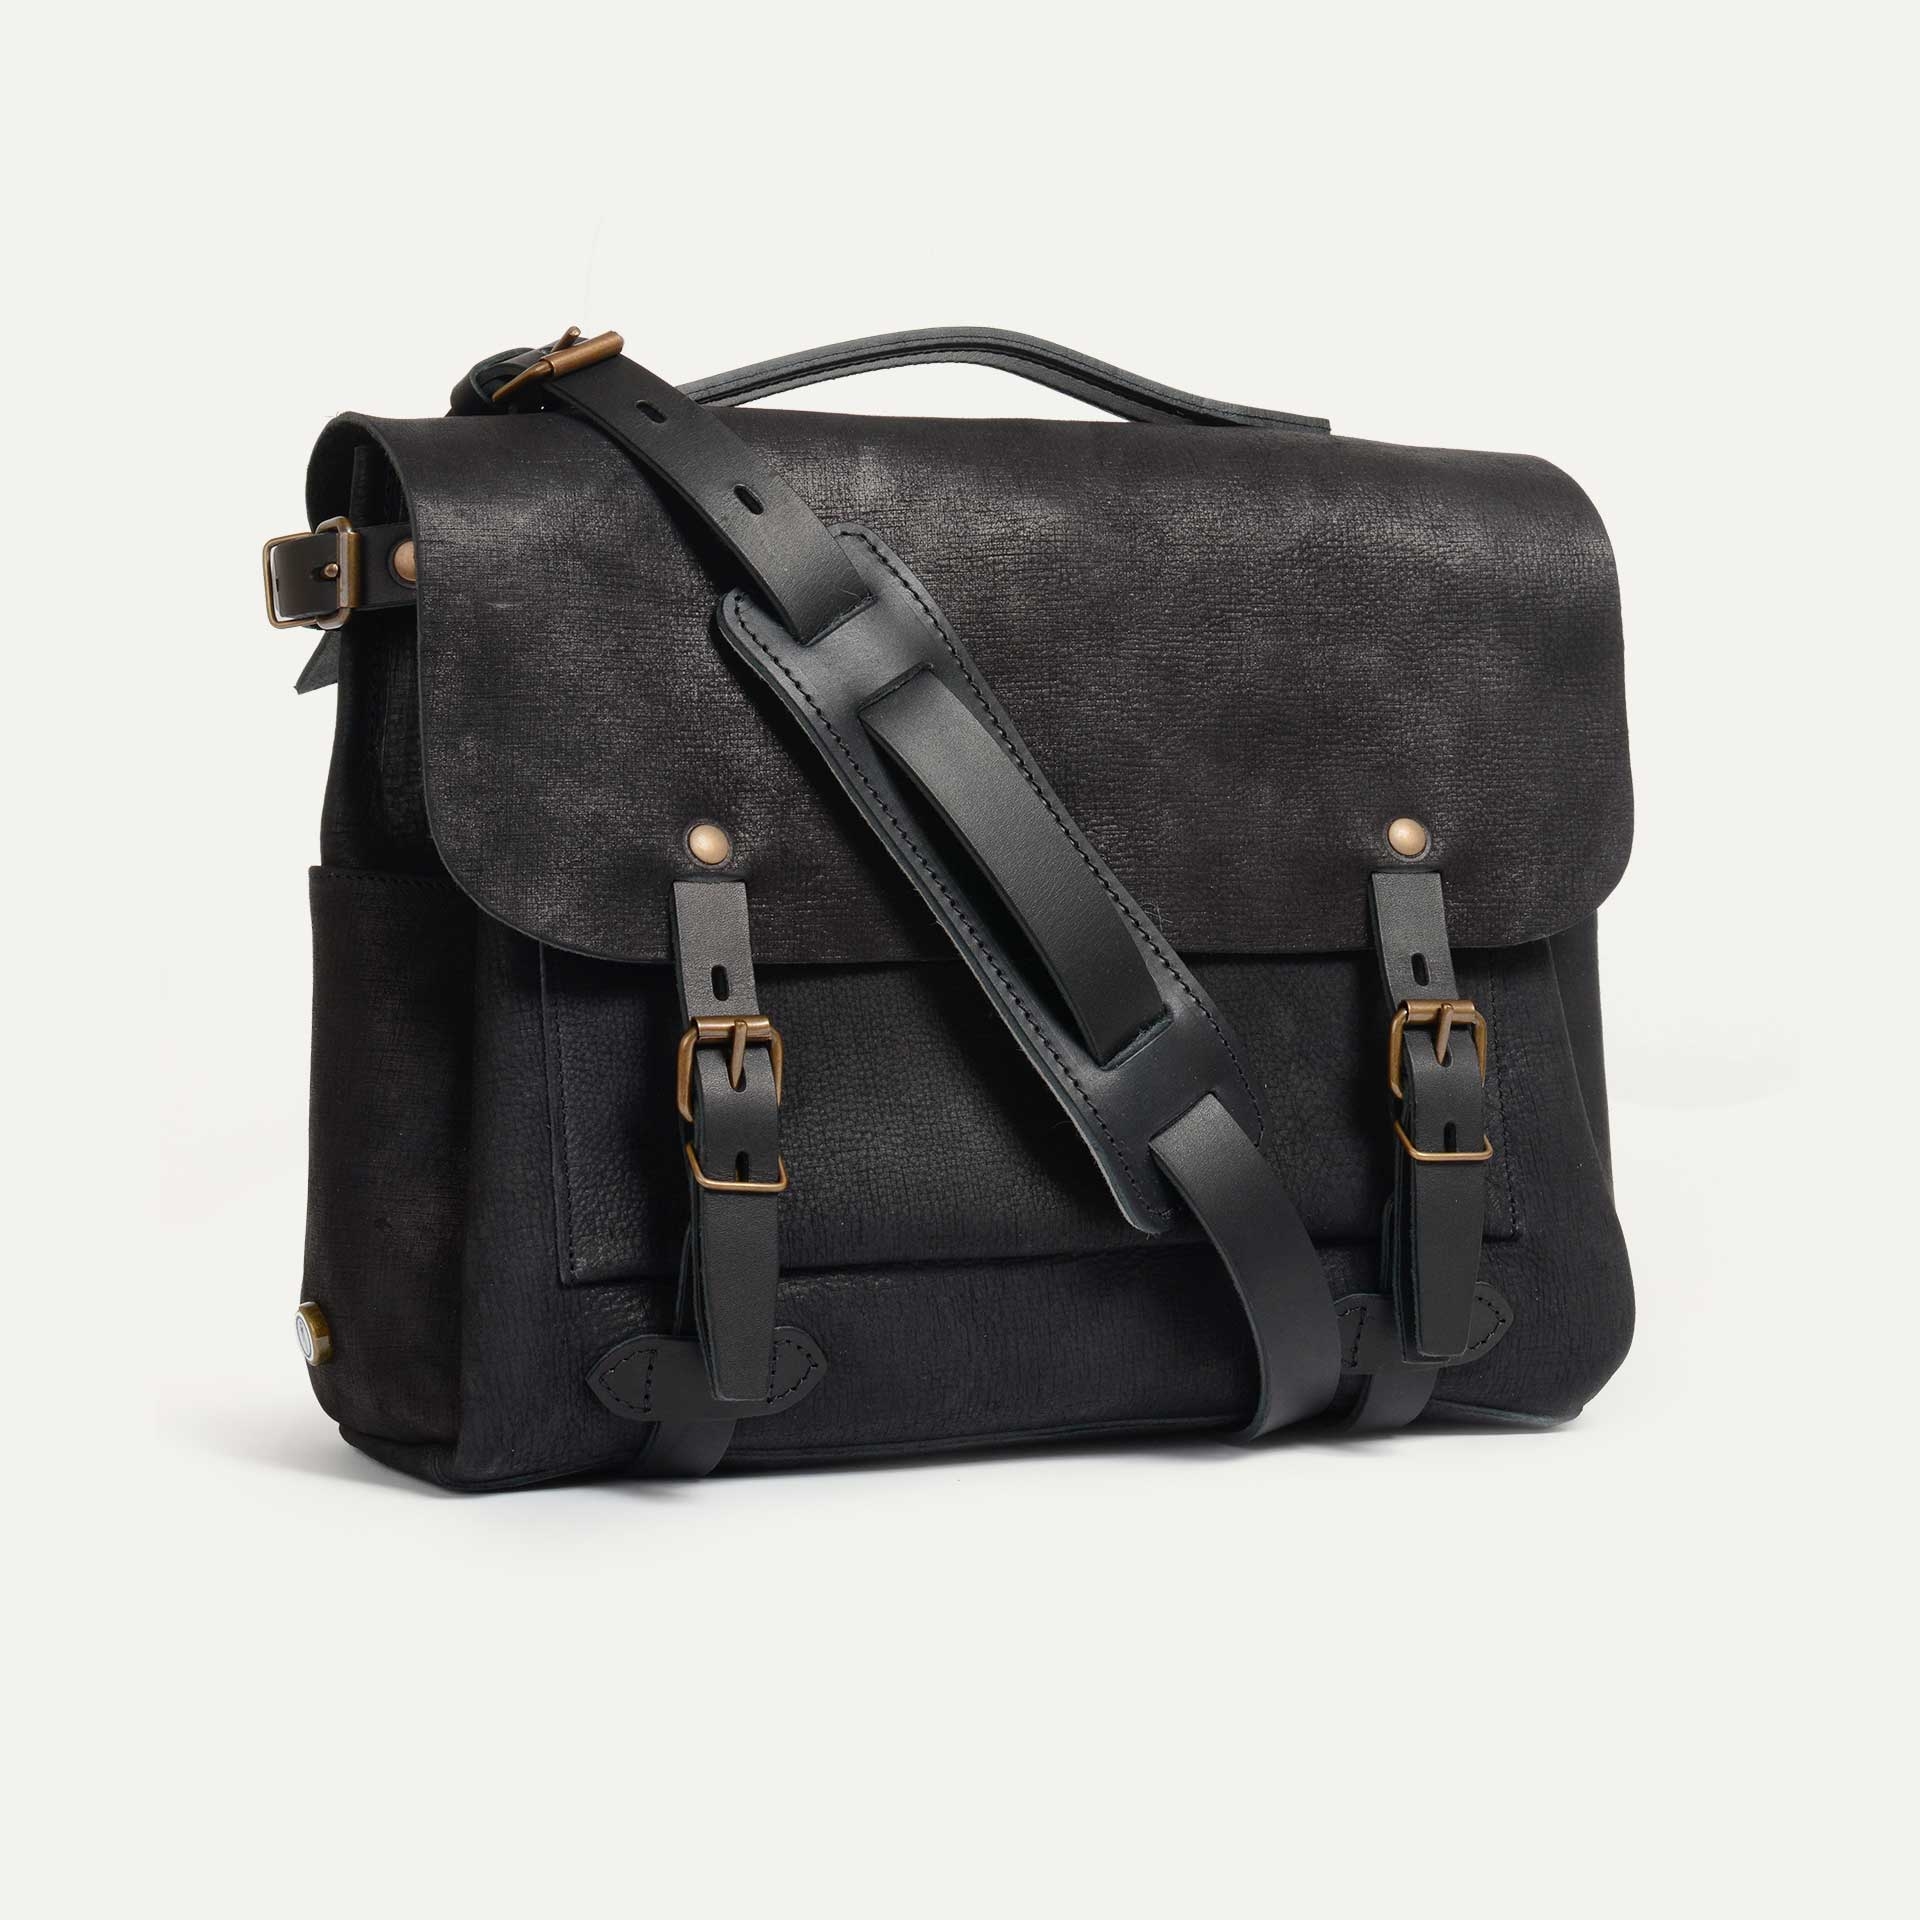 Postman bag Éclair M - Charcoal black / Waxed Leather (image n°2)